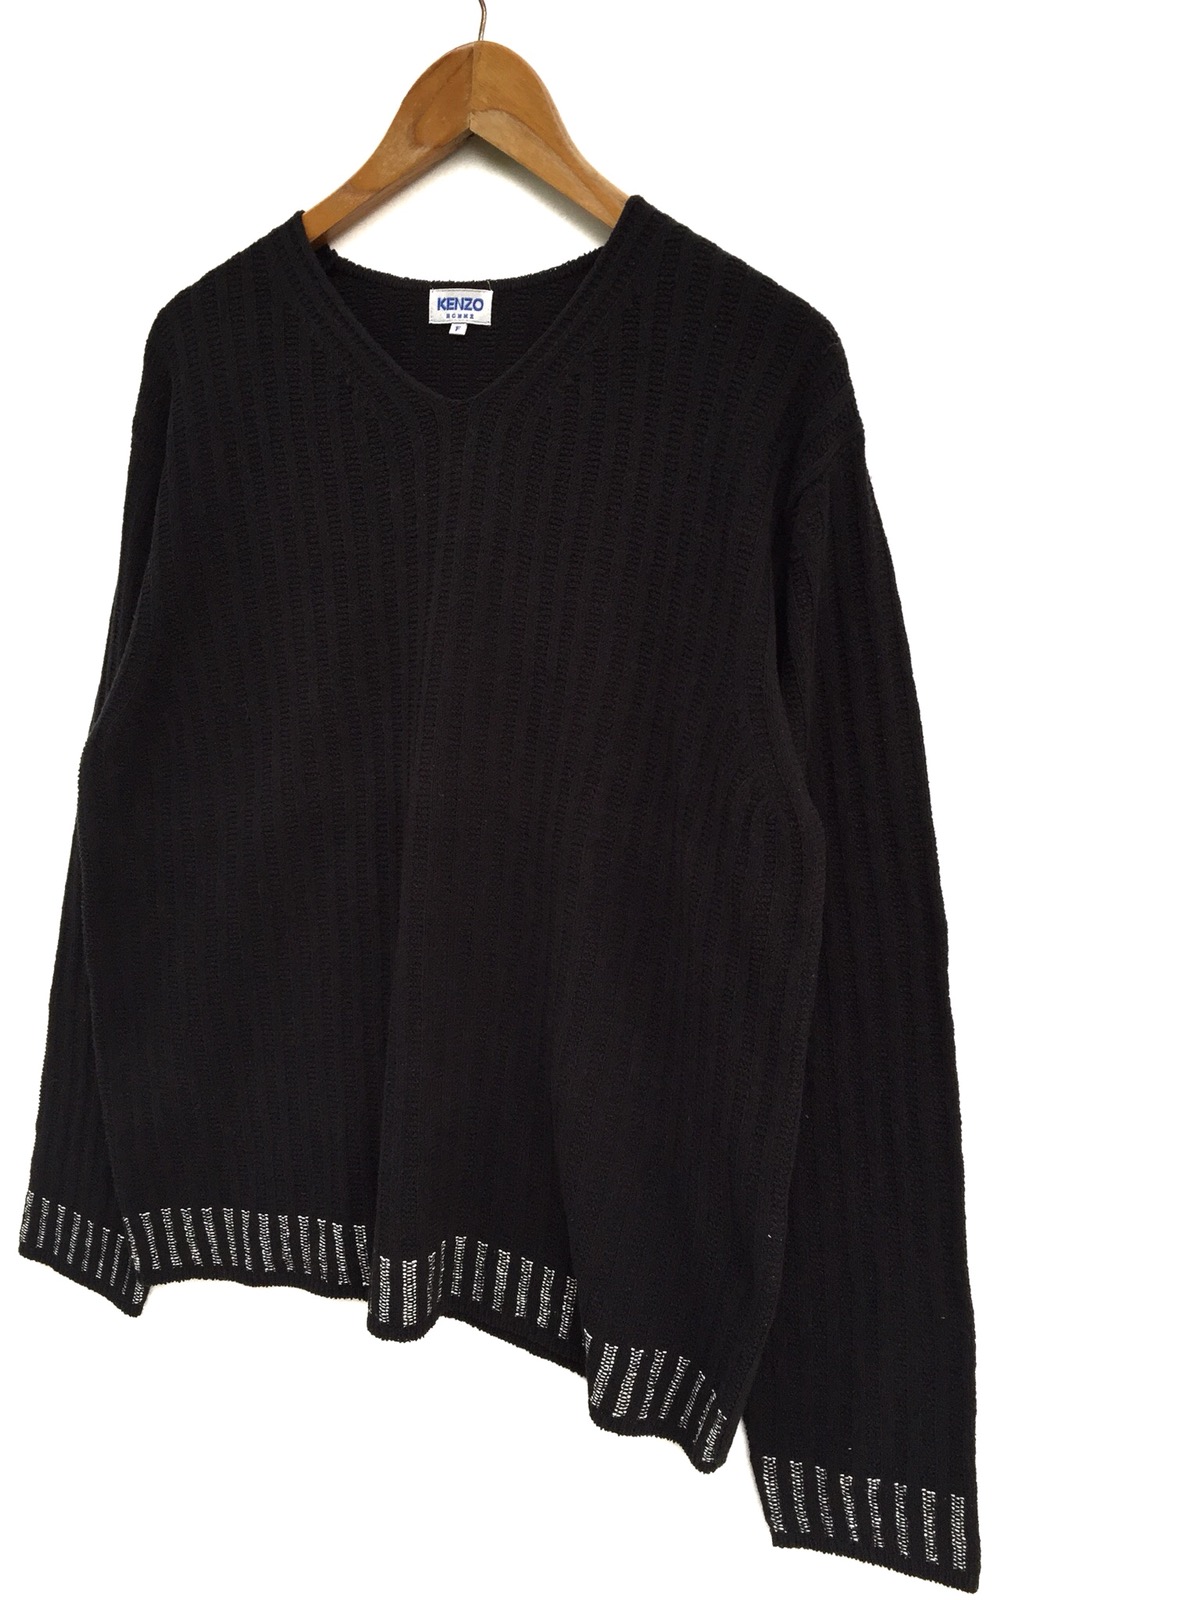 Vintage Japanese Brand Kenzo Hand Knit Black Sweatshirt - 3